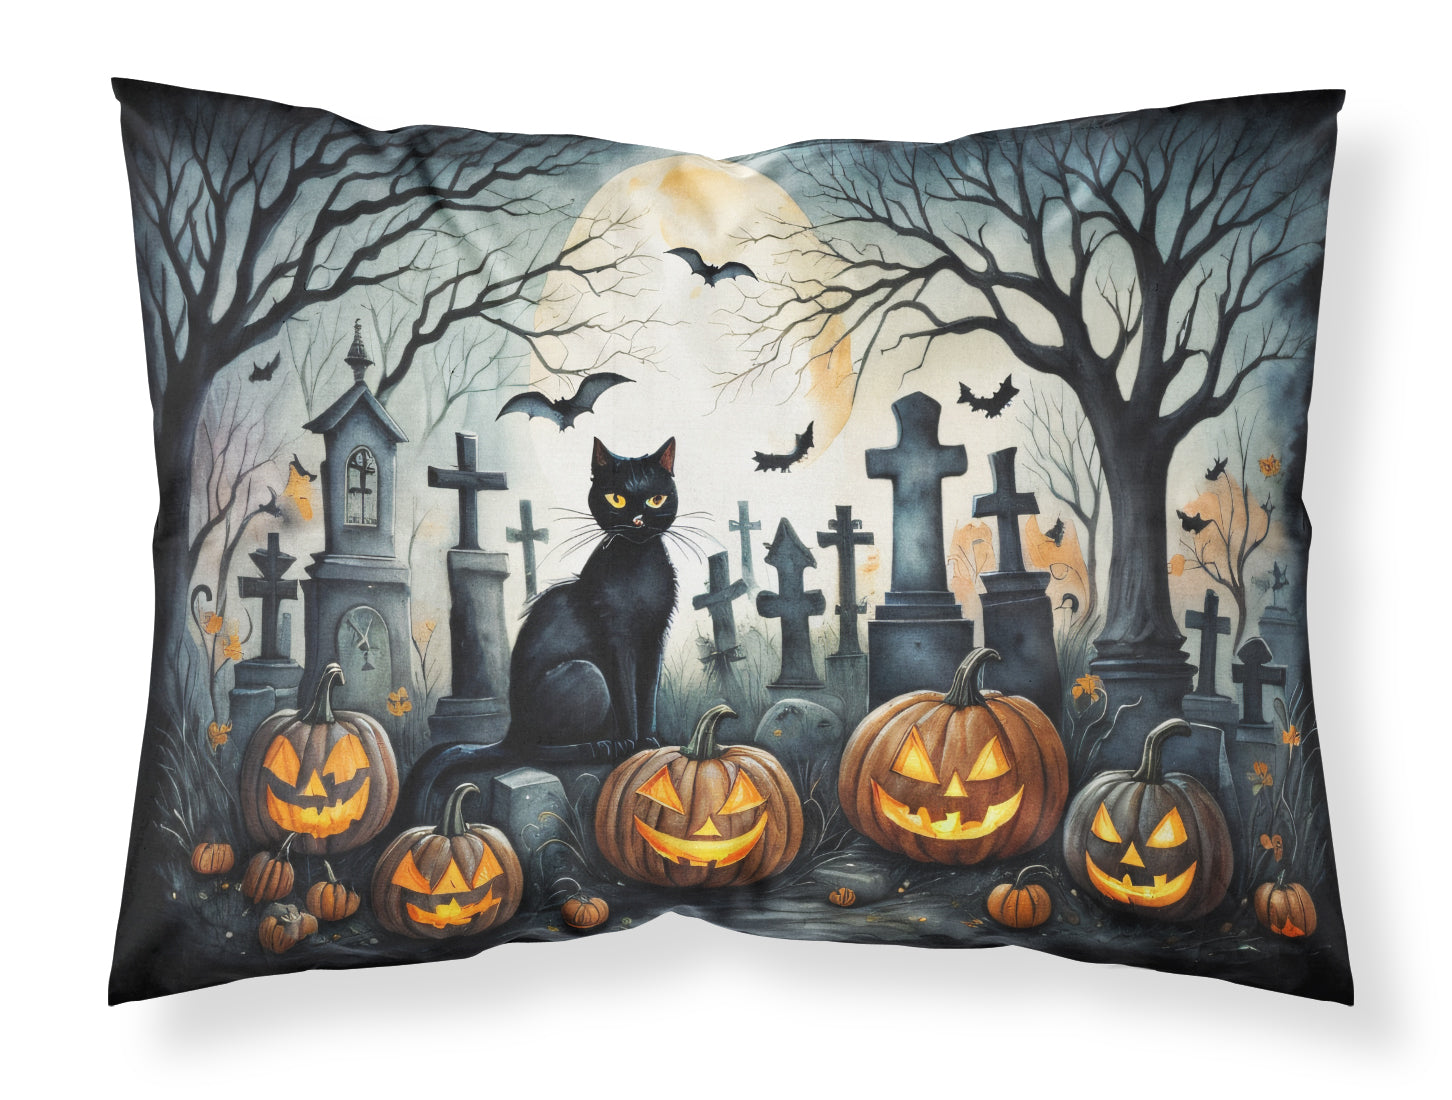 Buy this Black Cat Spooky Halloween Fabric Standard Pillowcase